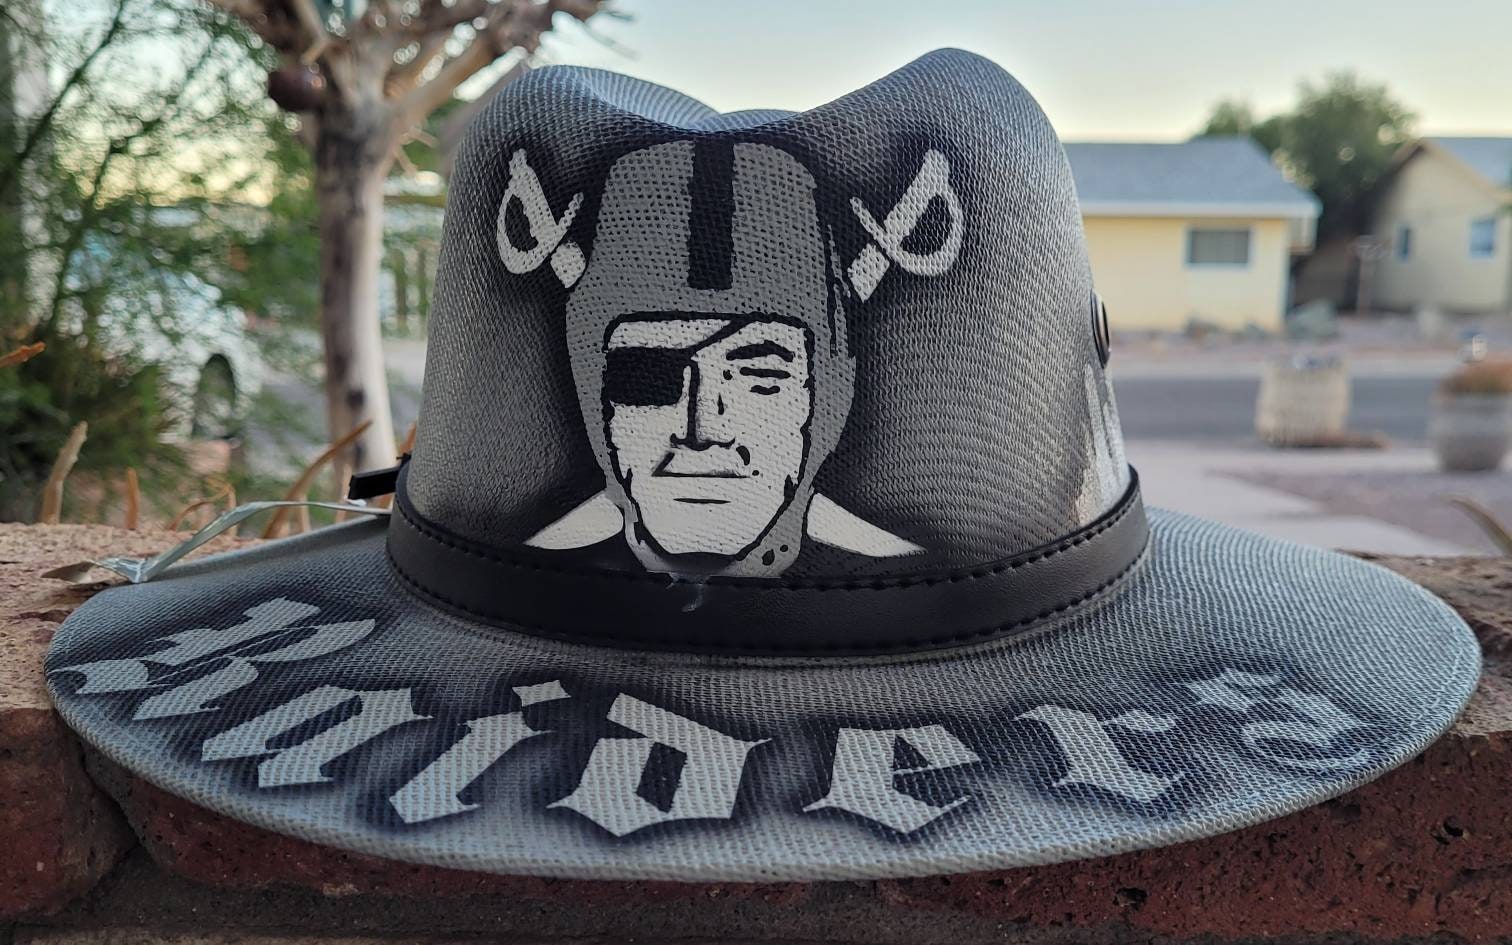 Raiders Straw Hat 